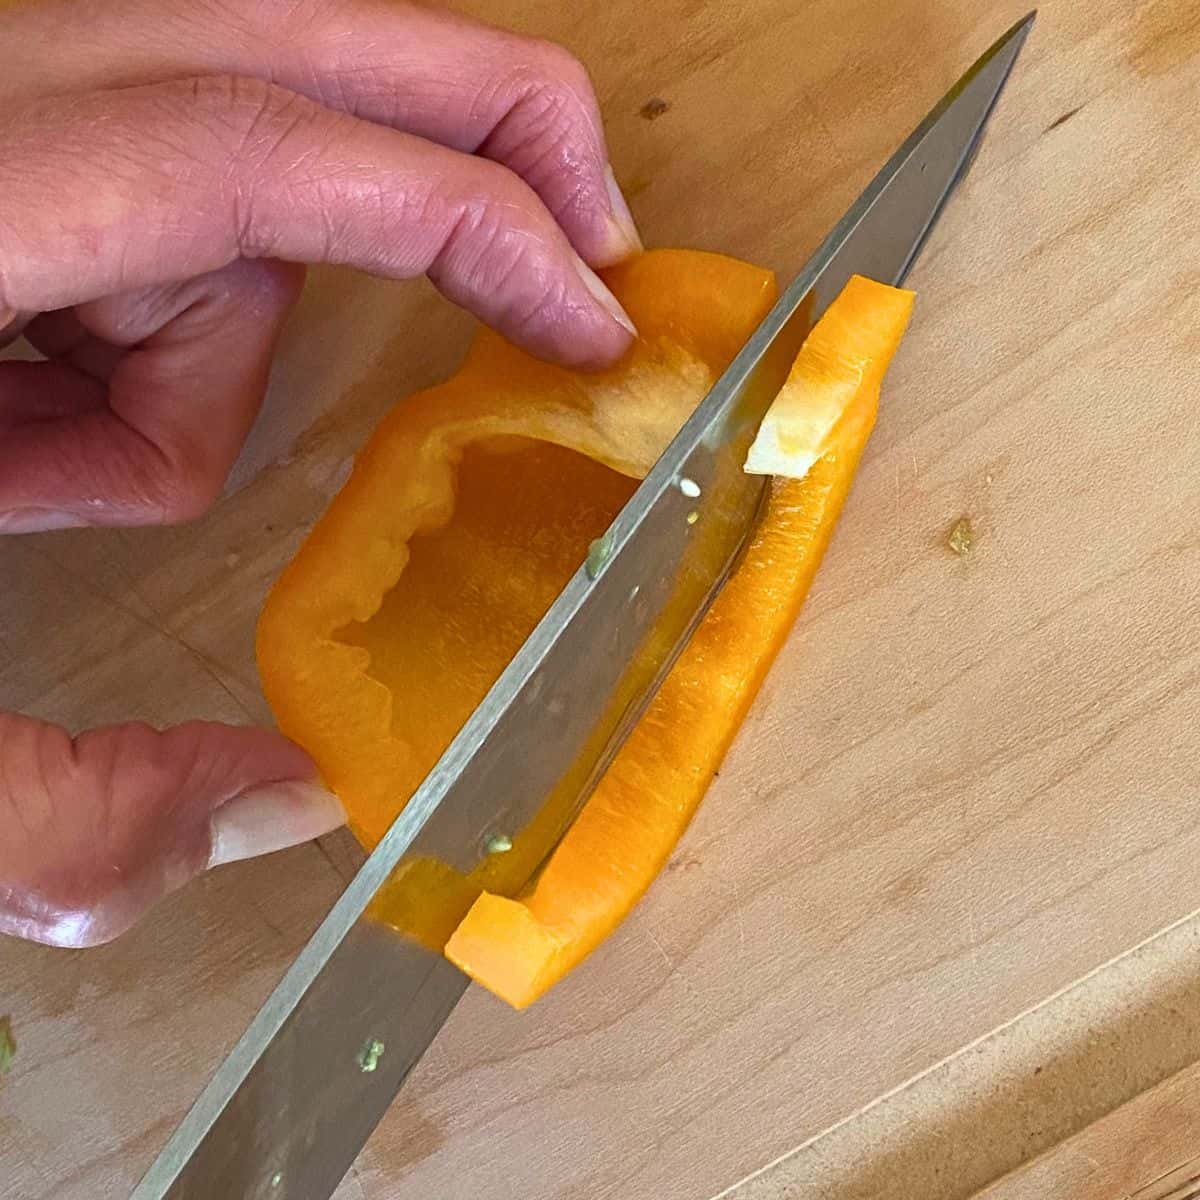 An orange pepper being sliced.